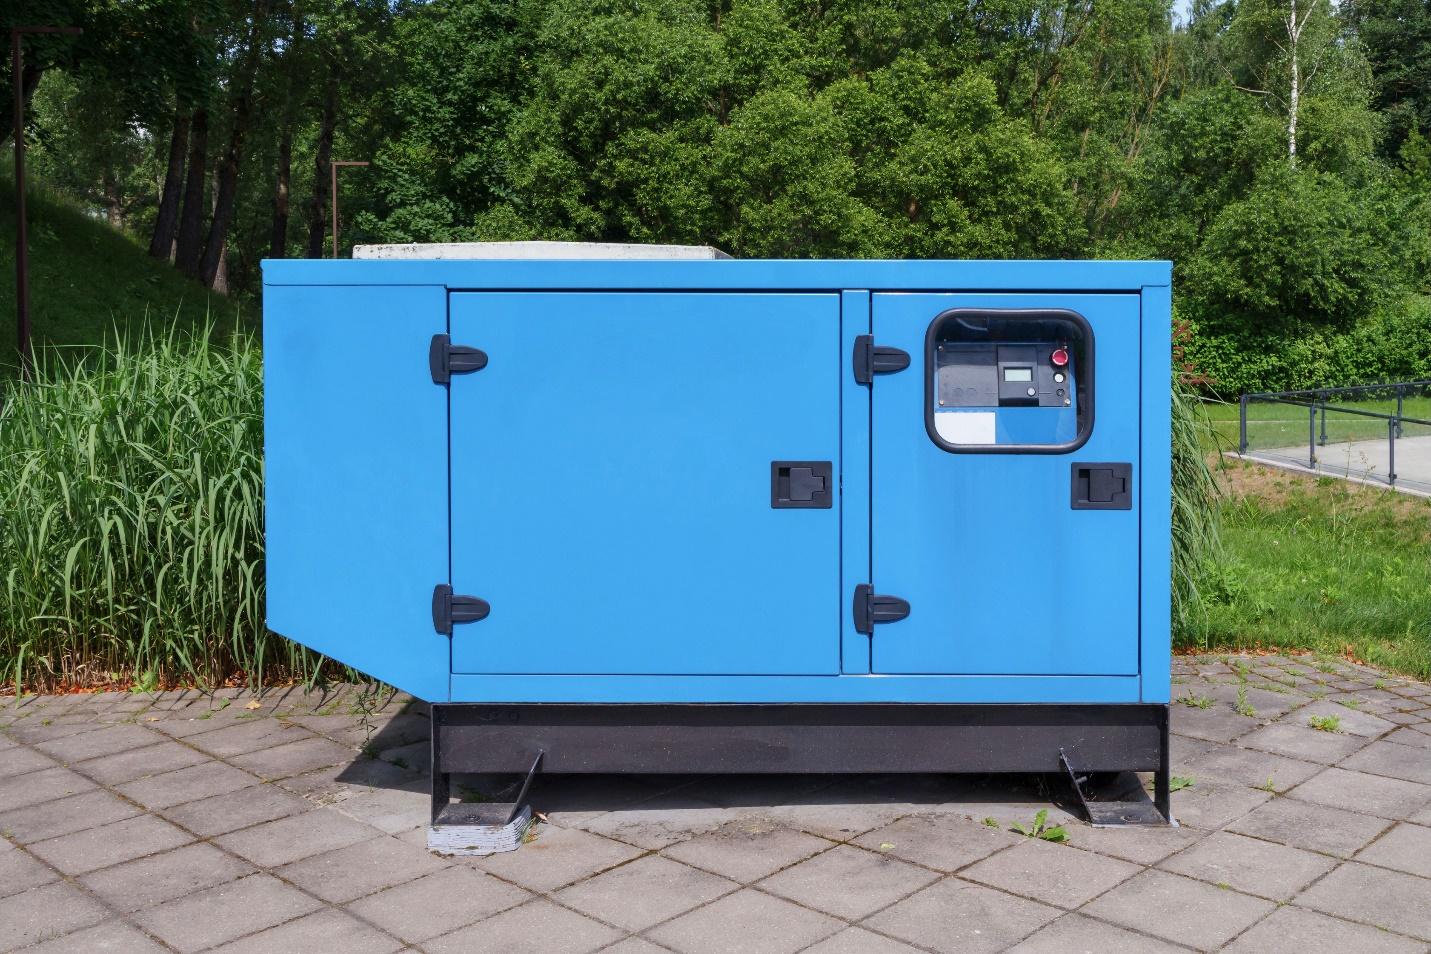 Massachusetts home generator in a residential setting